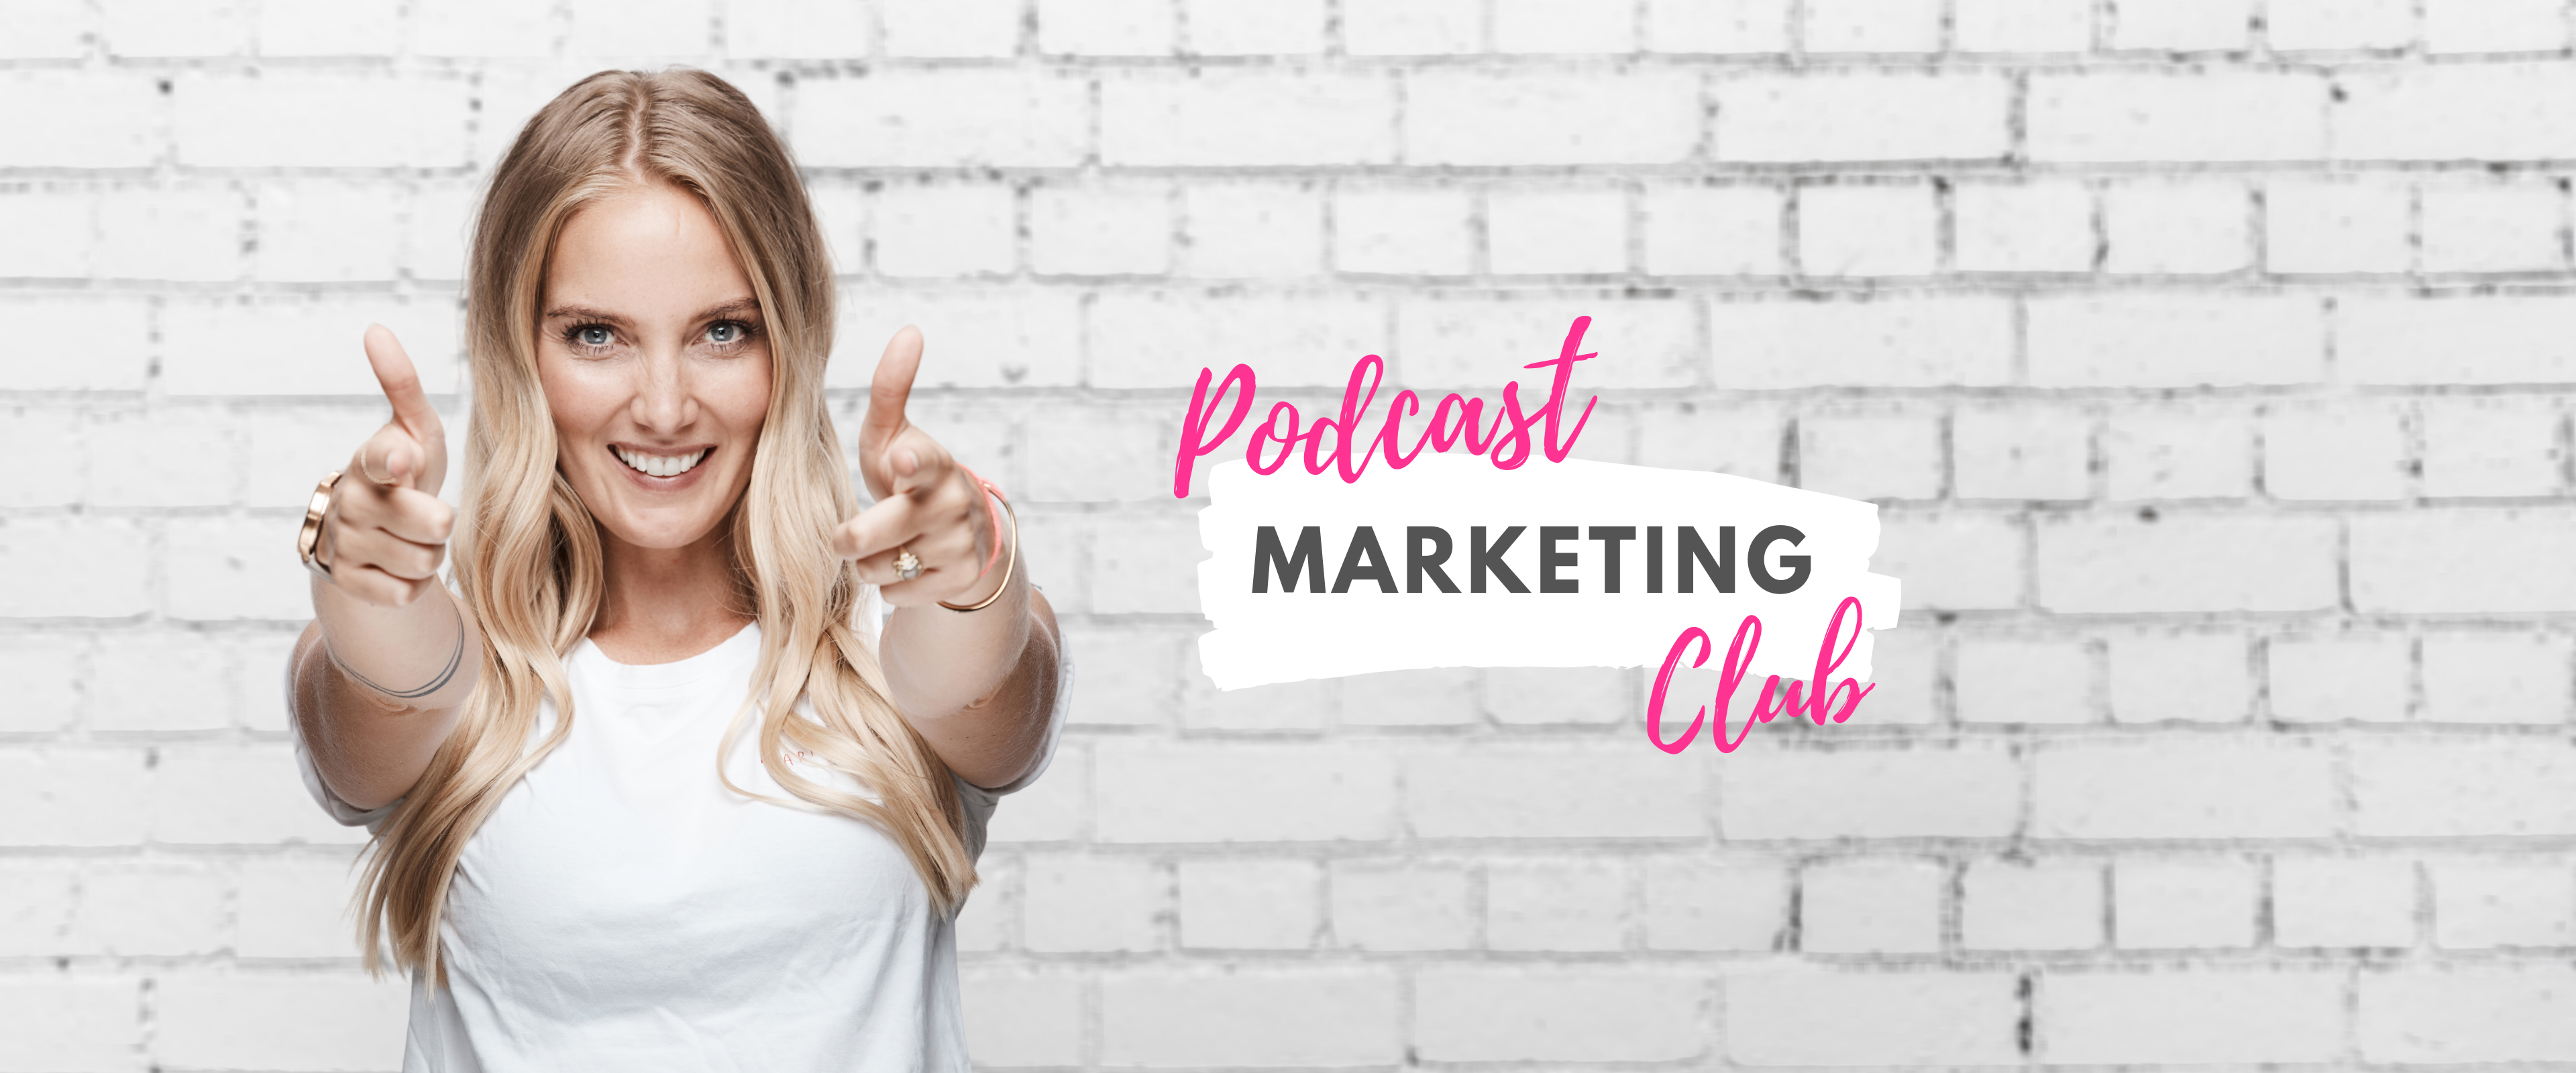 Podcast Marketing Club Podcast Paula Thurm 04